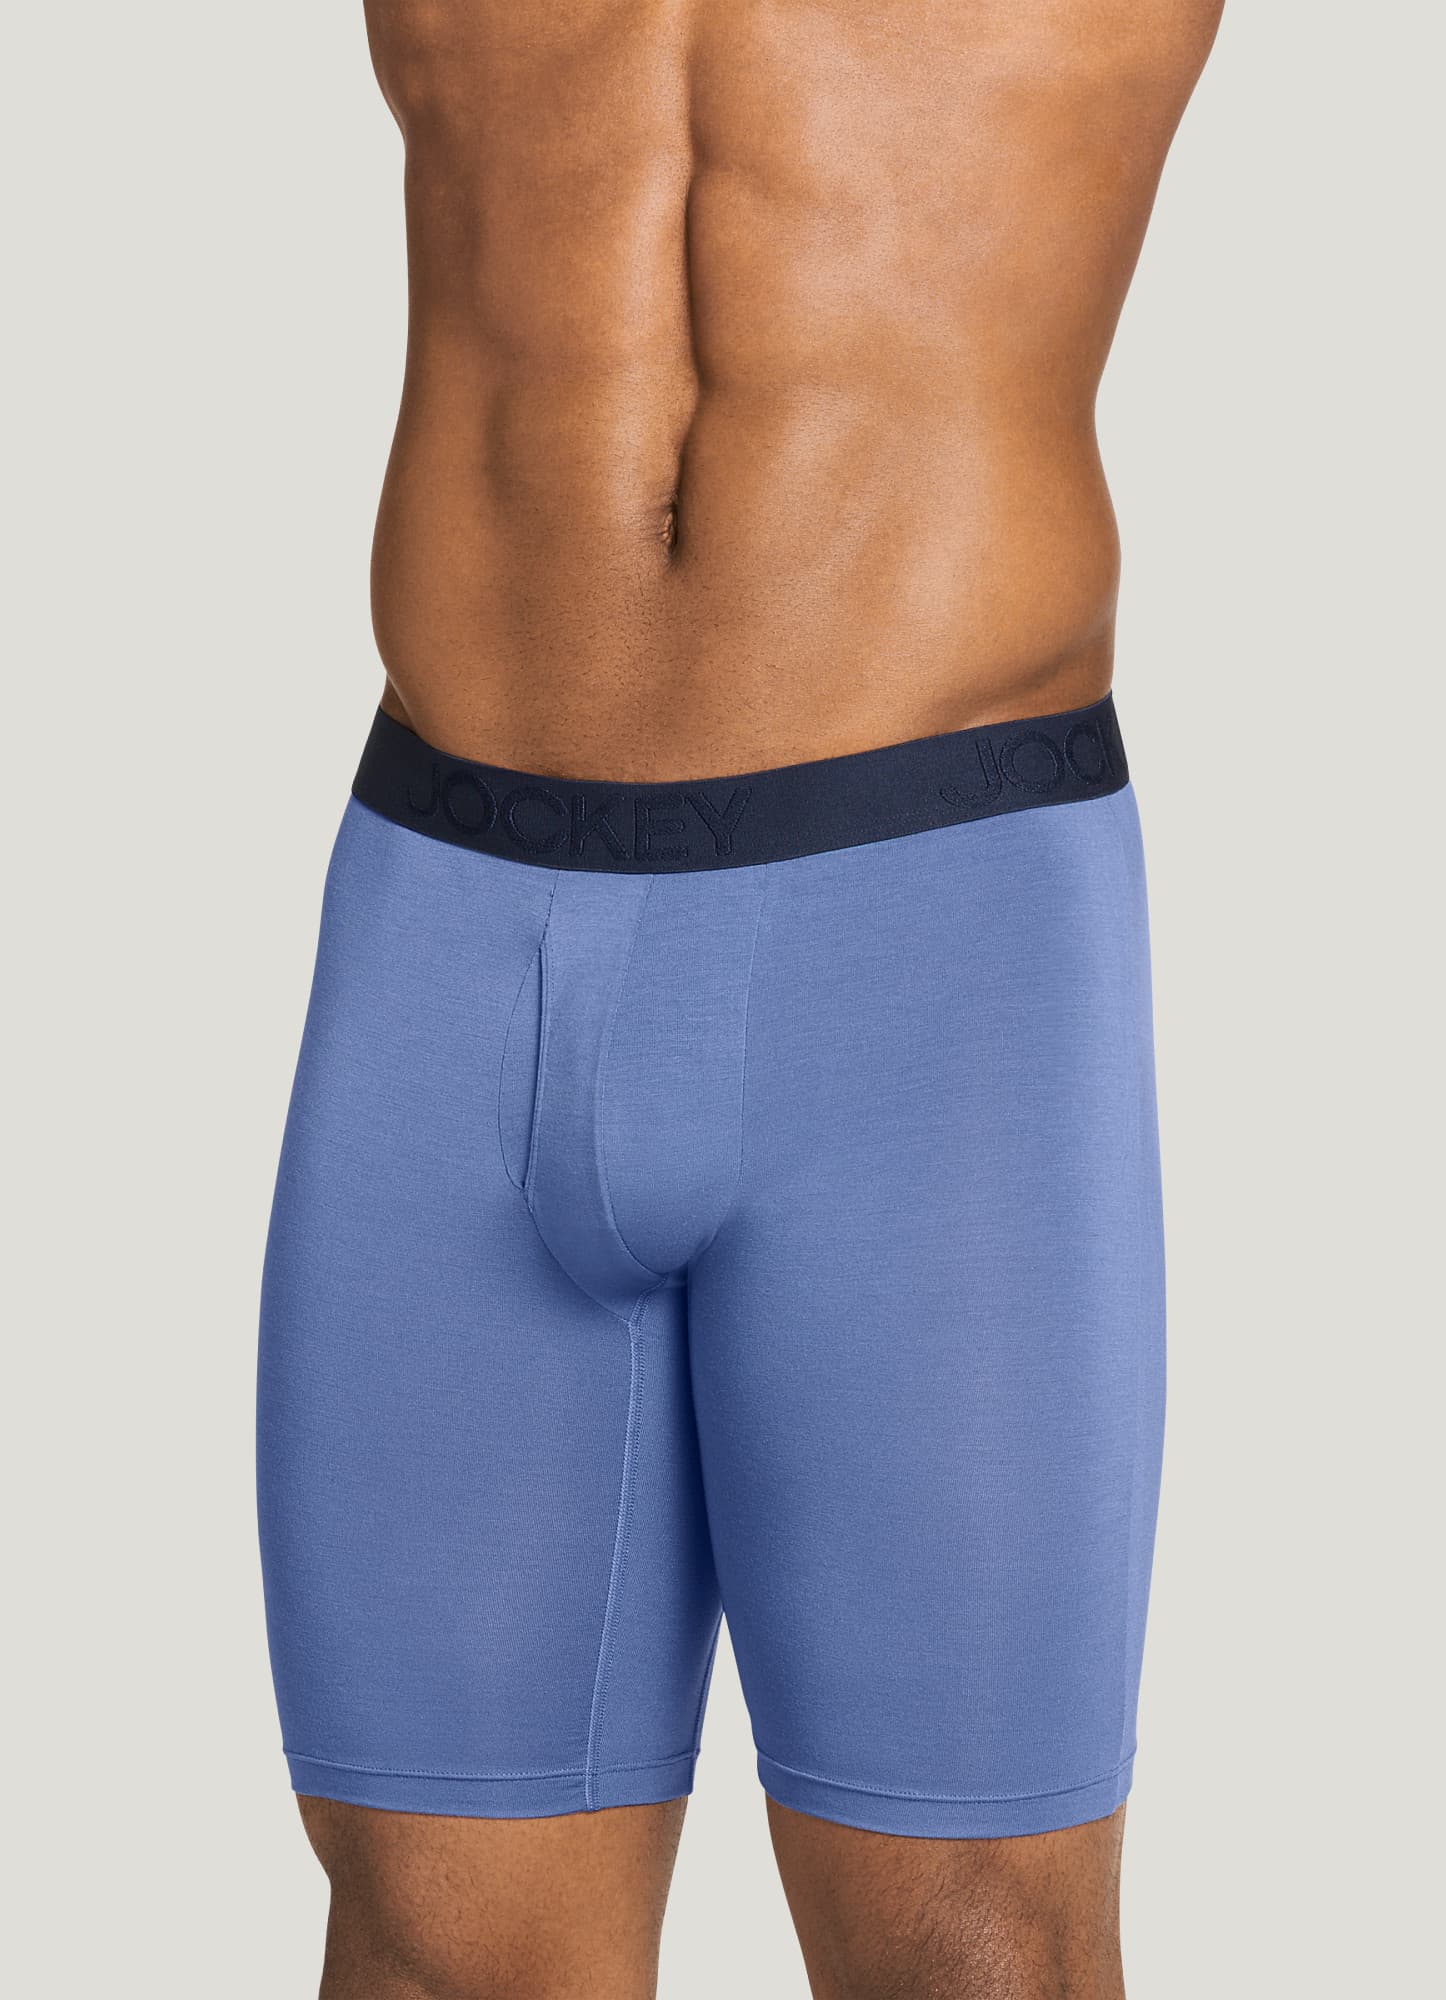 AND1 Men's Underwear - Long Leg Performance Compression Boxer Briefs (5  Pack)